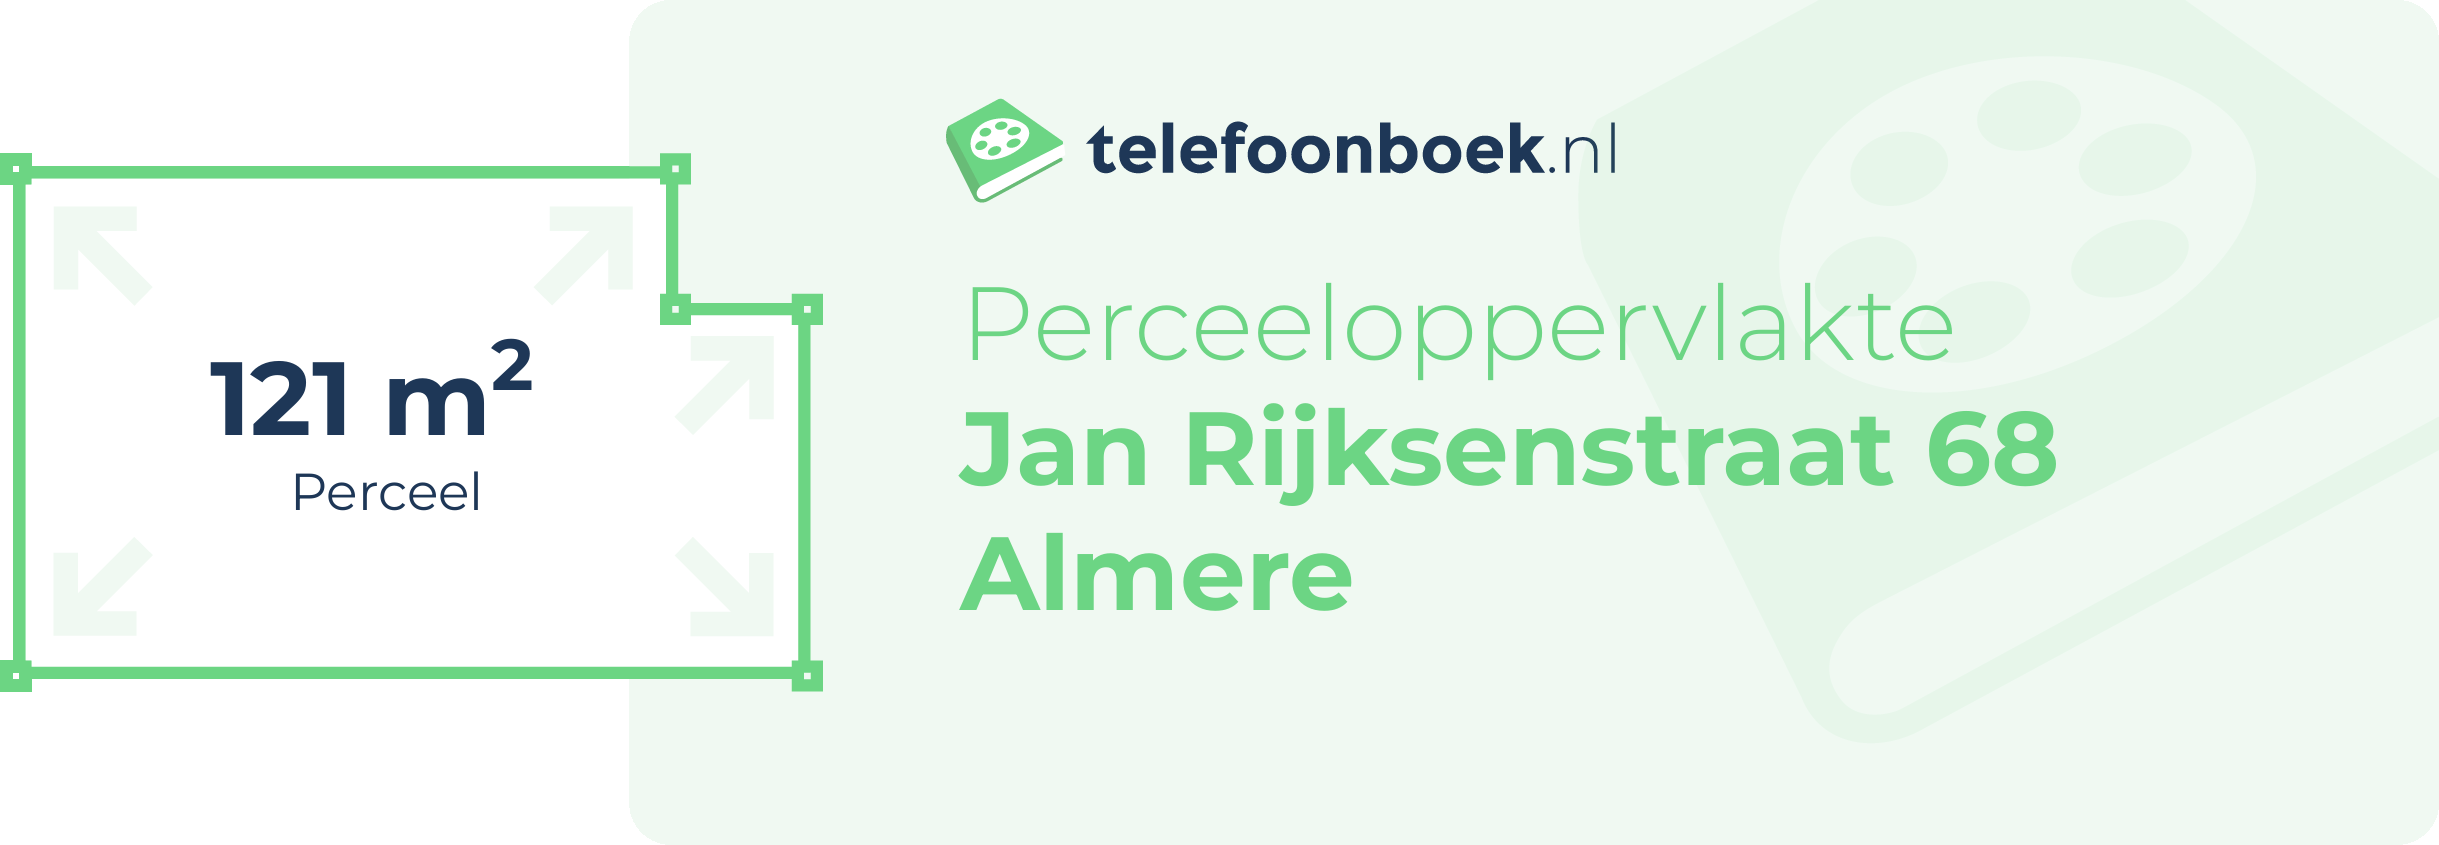 Perceeloppervlakte Jan Rijksenstraat 68 Almere